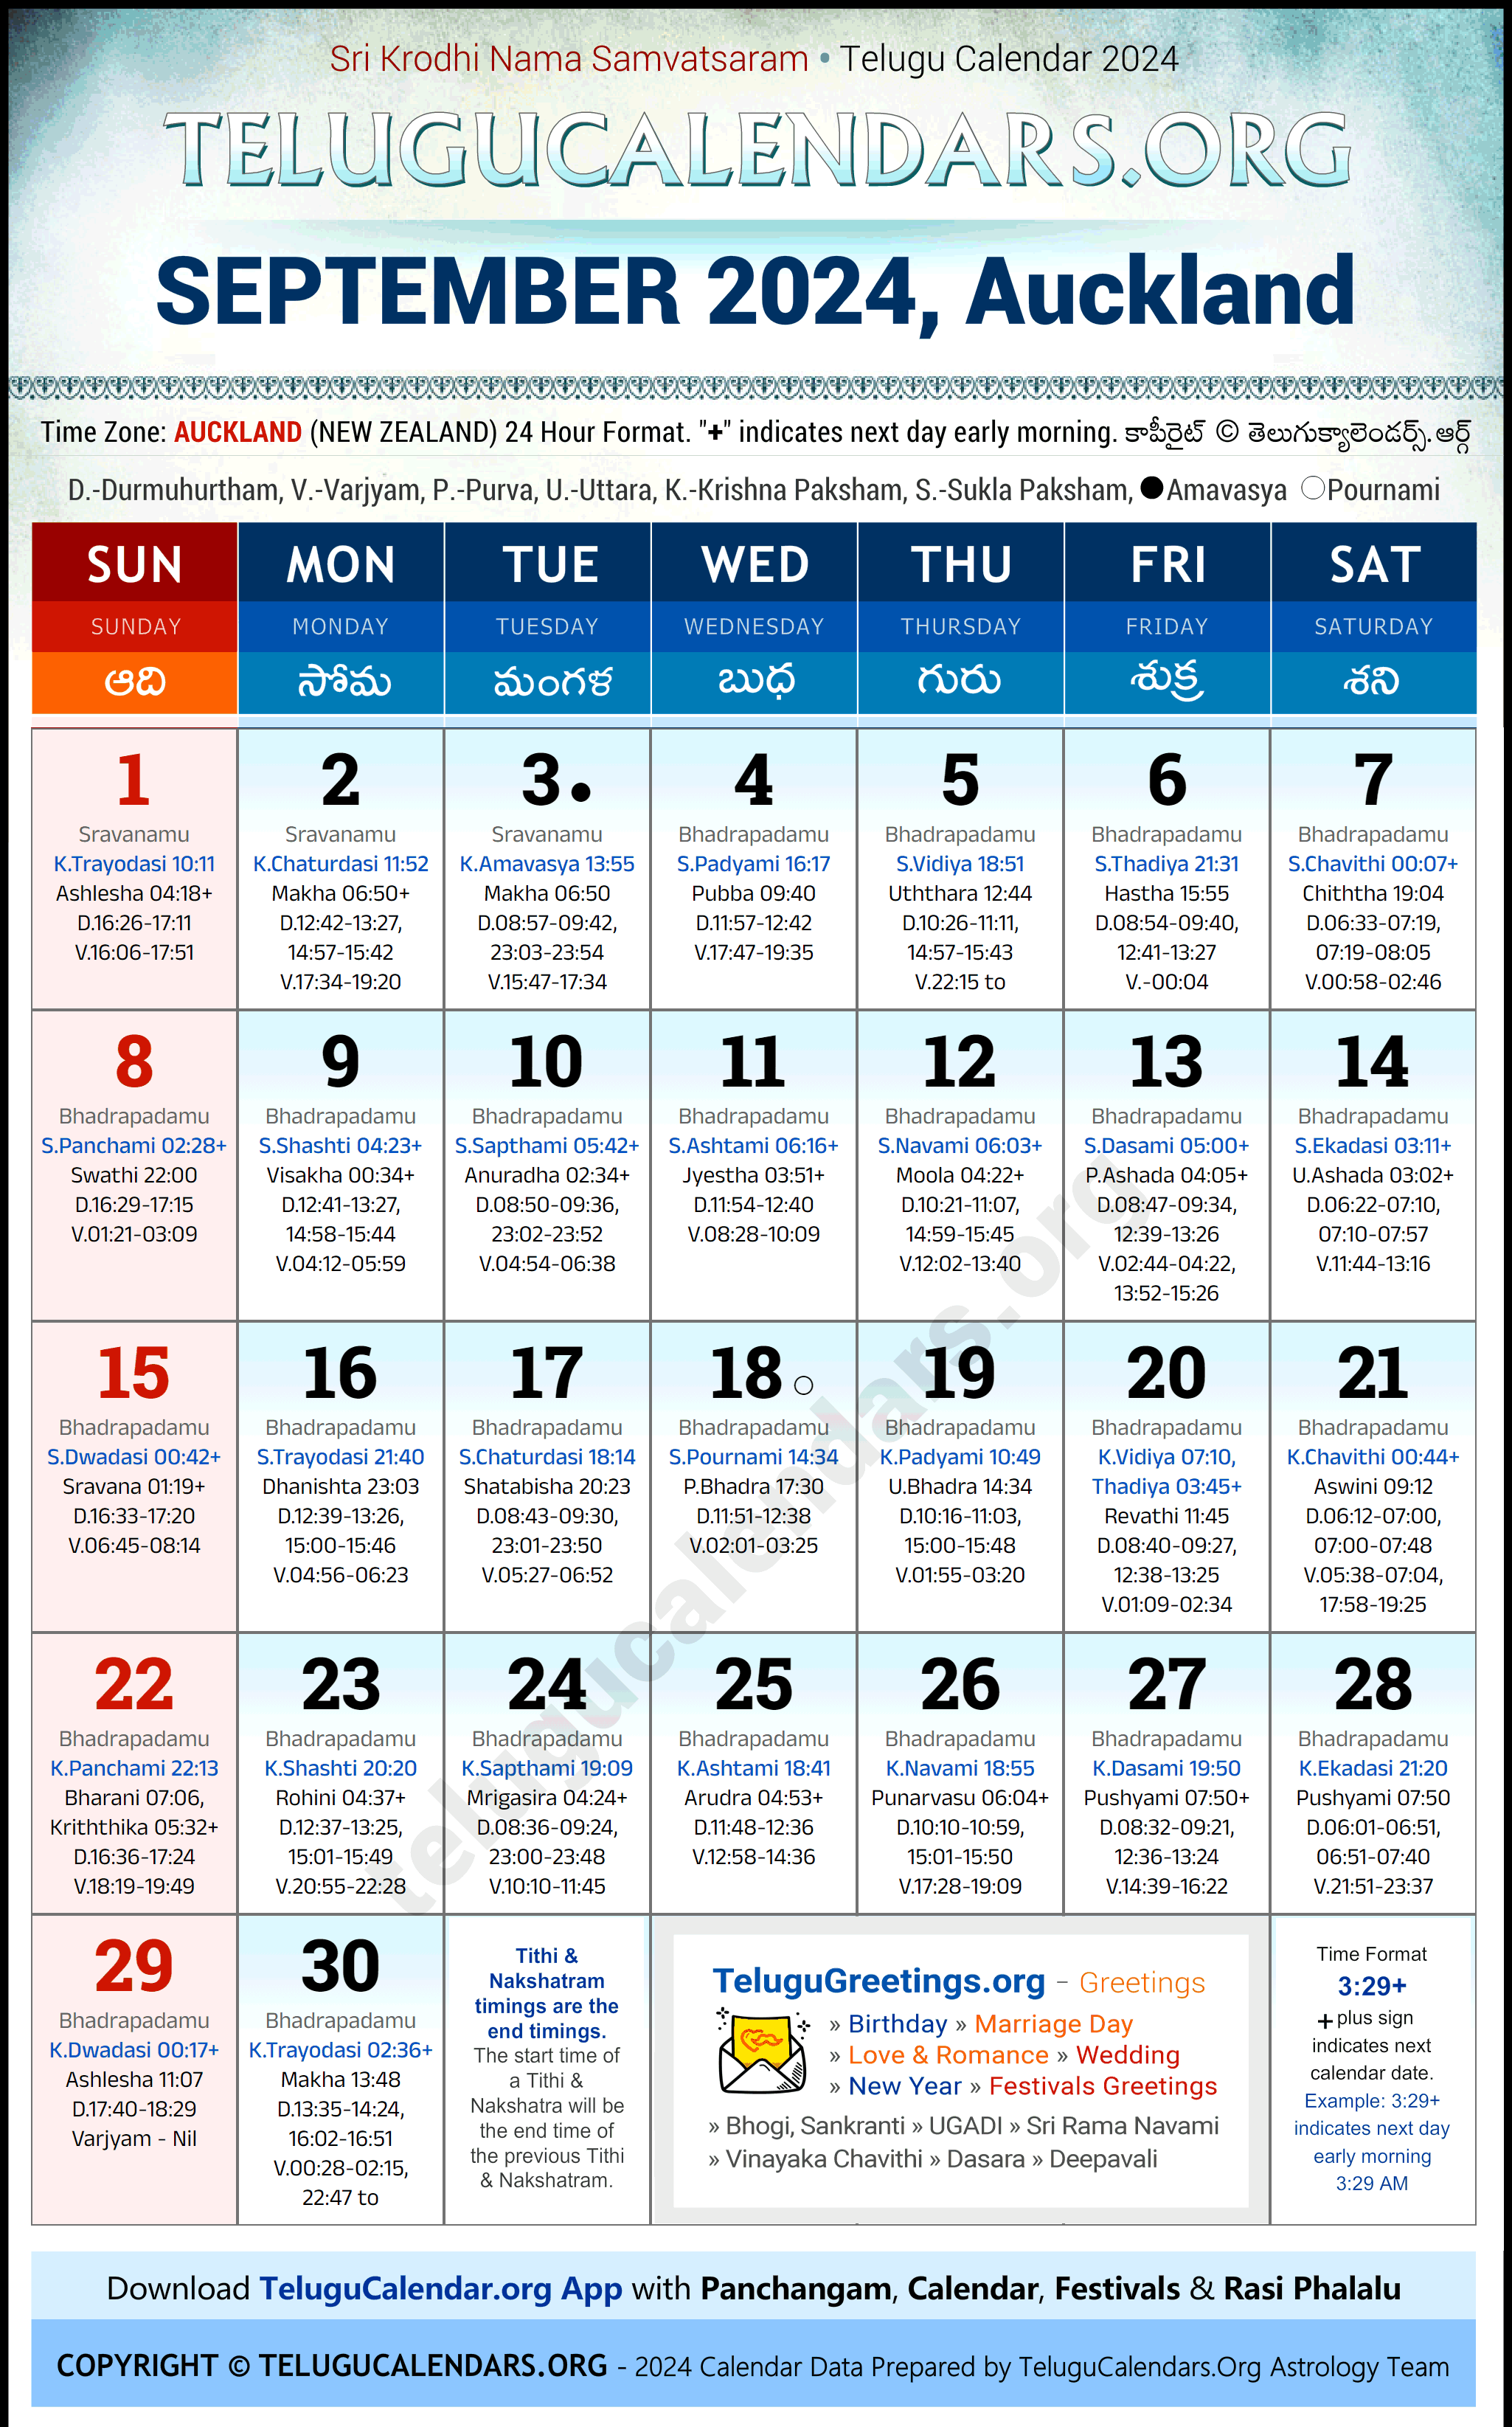 Telugu Calendar 2024 September Festivals for Auckland